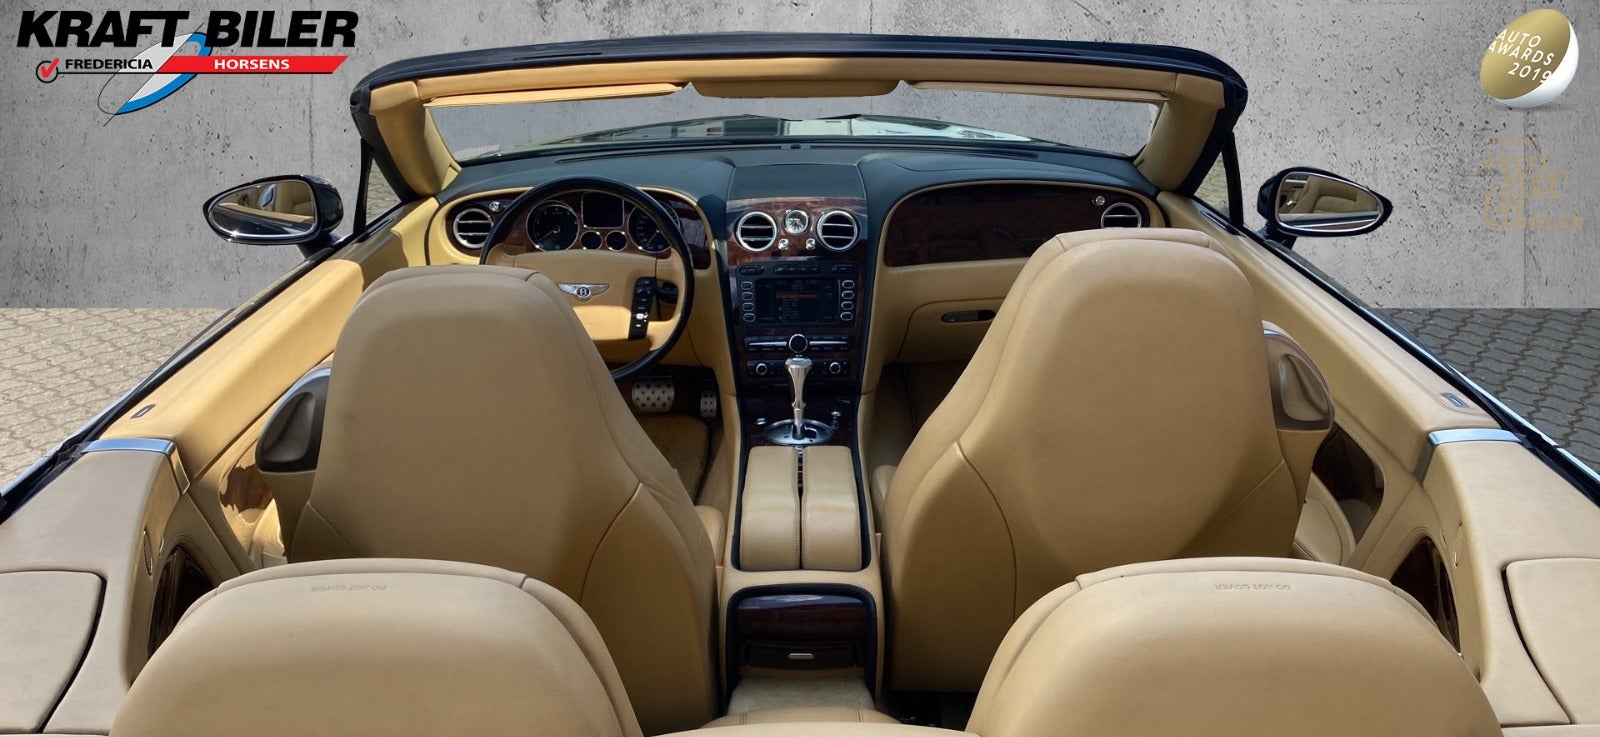 Billede af Bentley Continental GTC 6,0 aut.